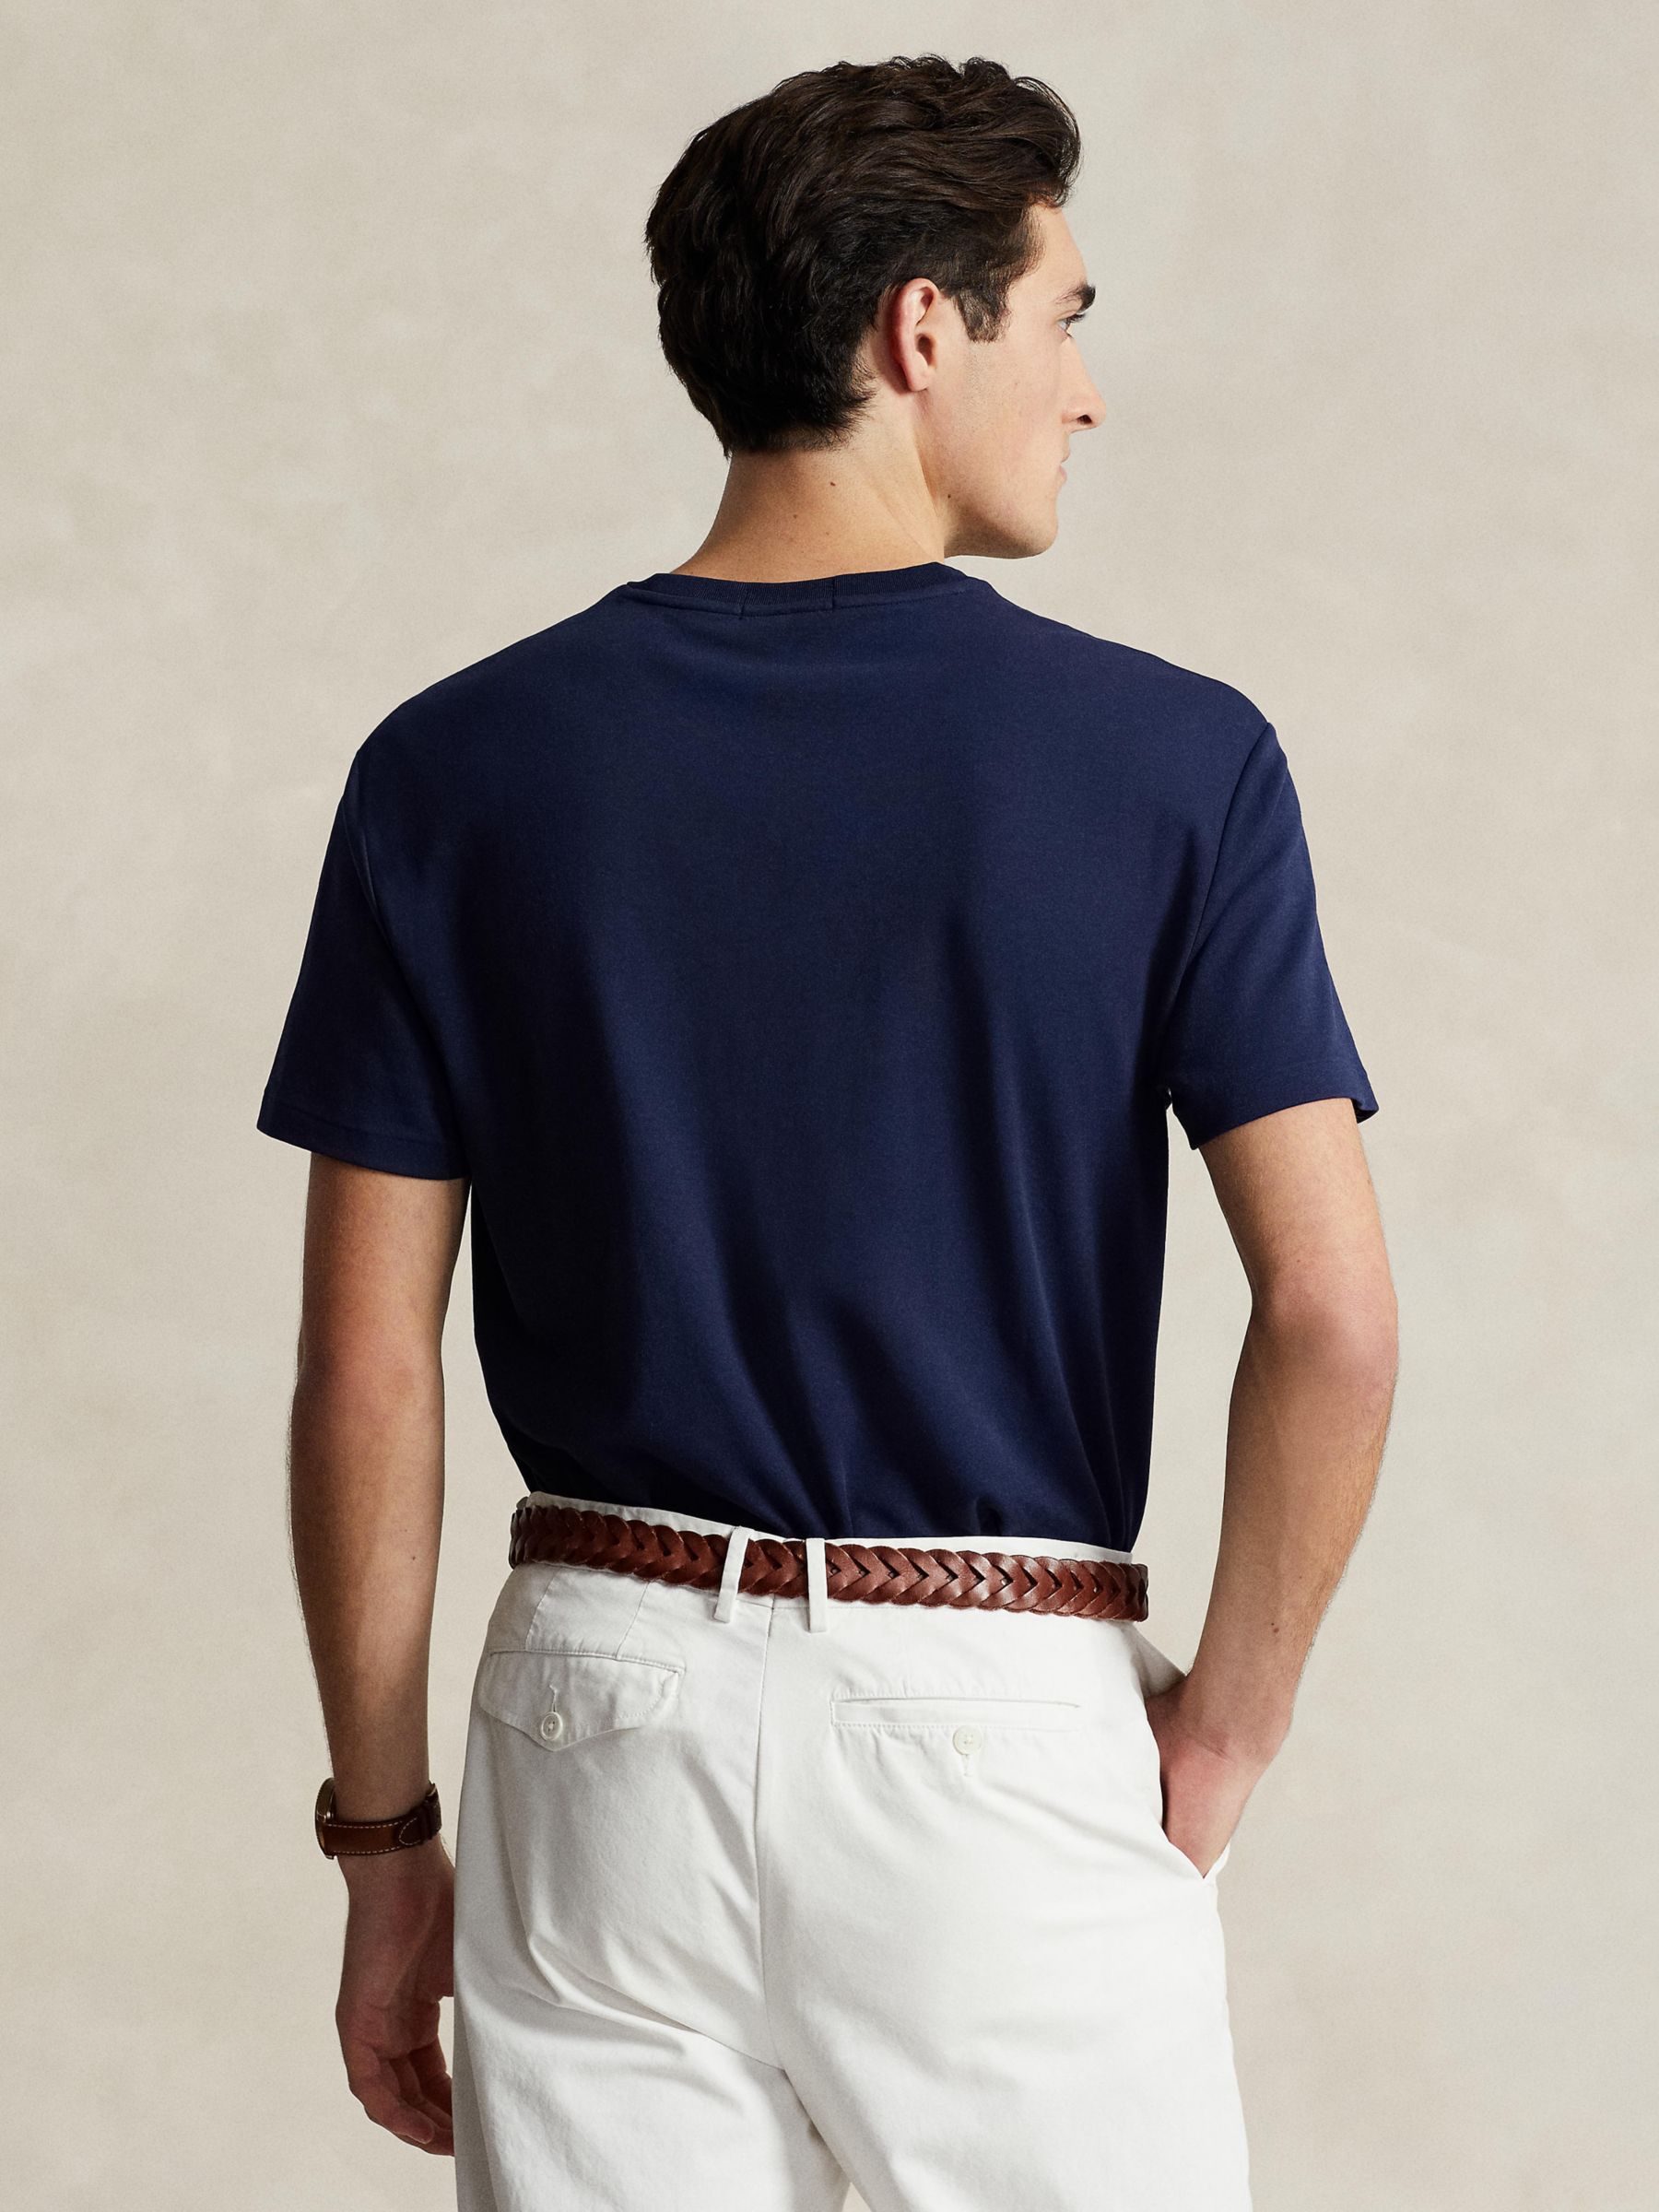 Buy Polo Ralph Lauren Pima Cotton Custom Fit Crew Neck T-Shirt Online at johnlewis.com